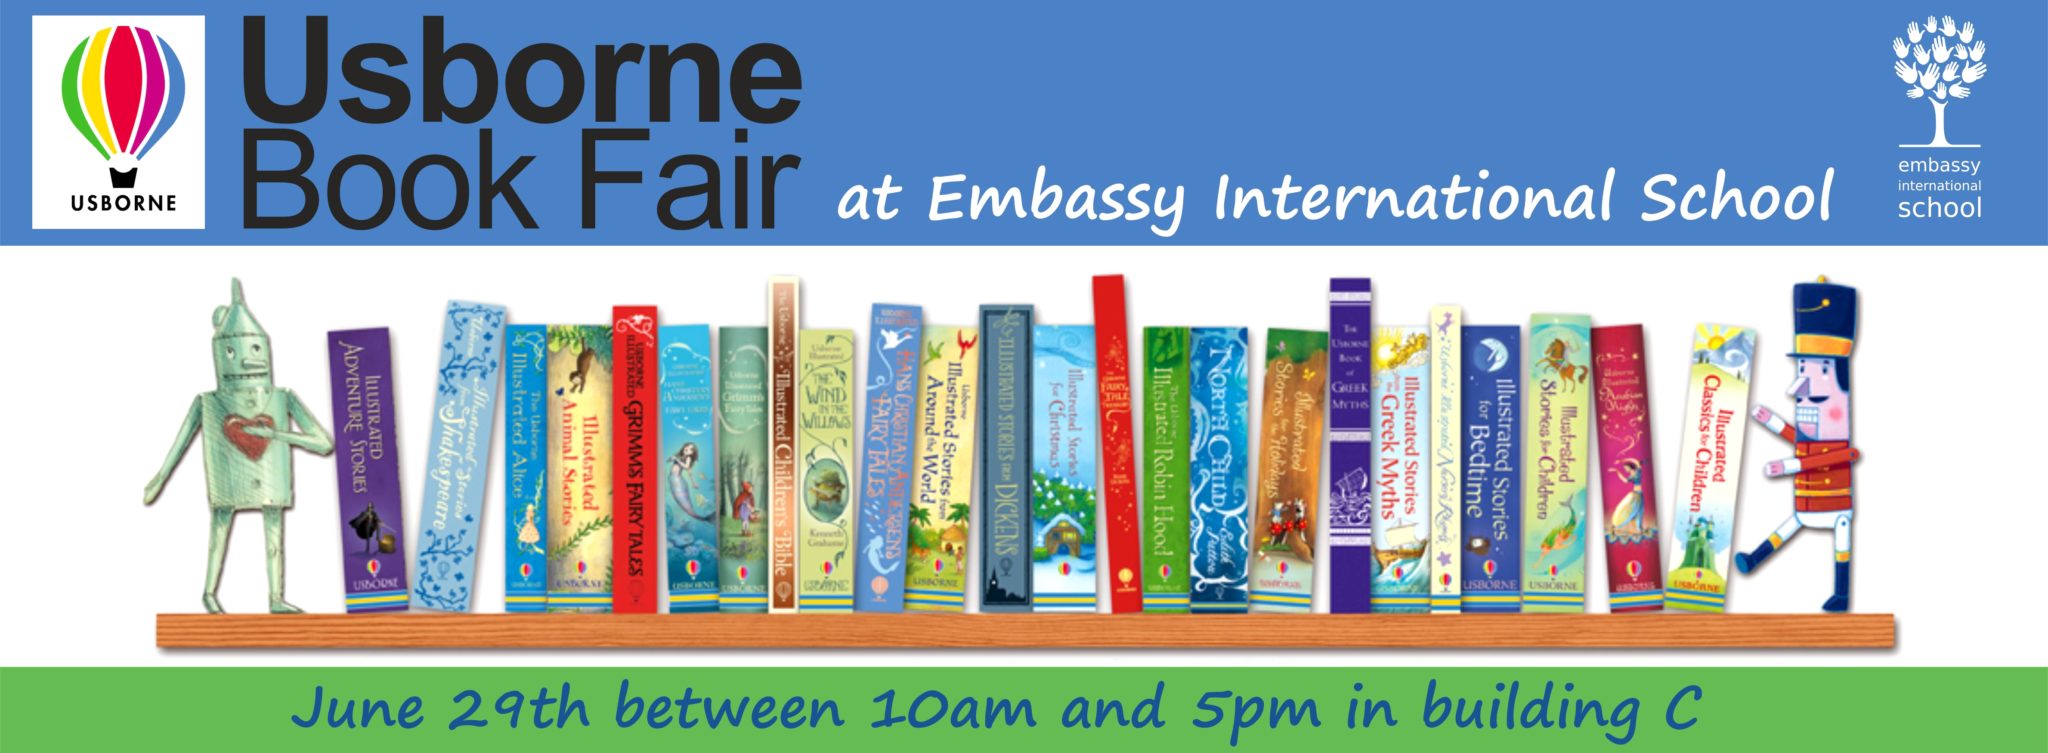 Usborne book fair